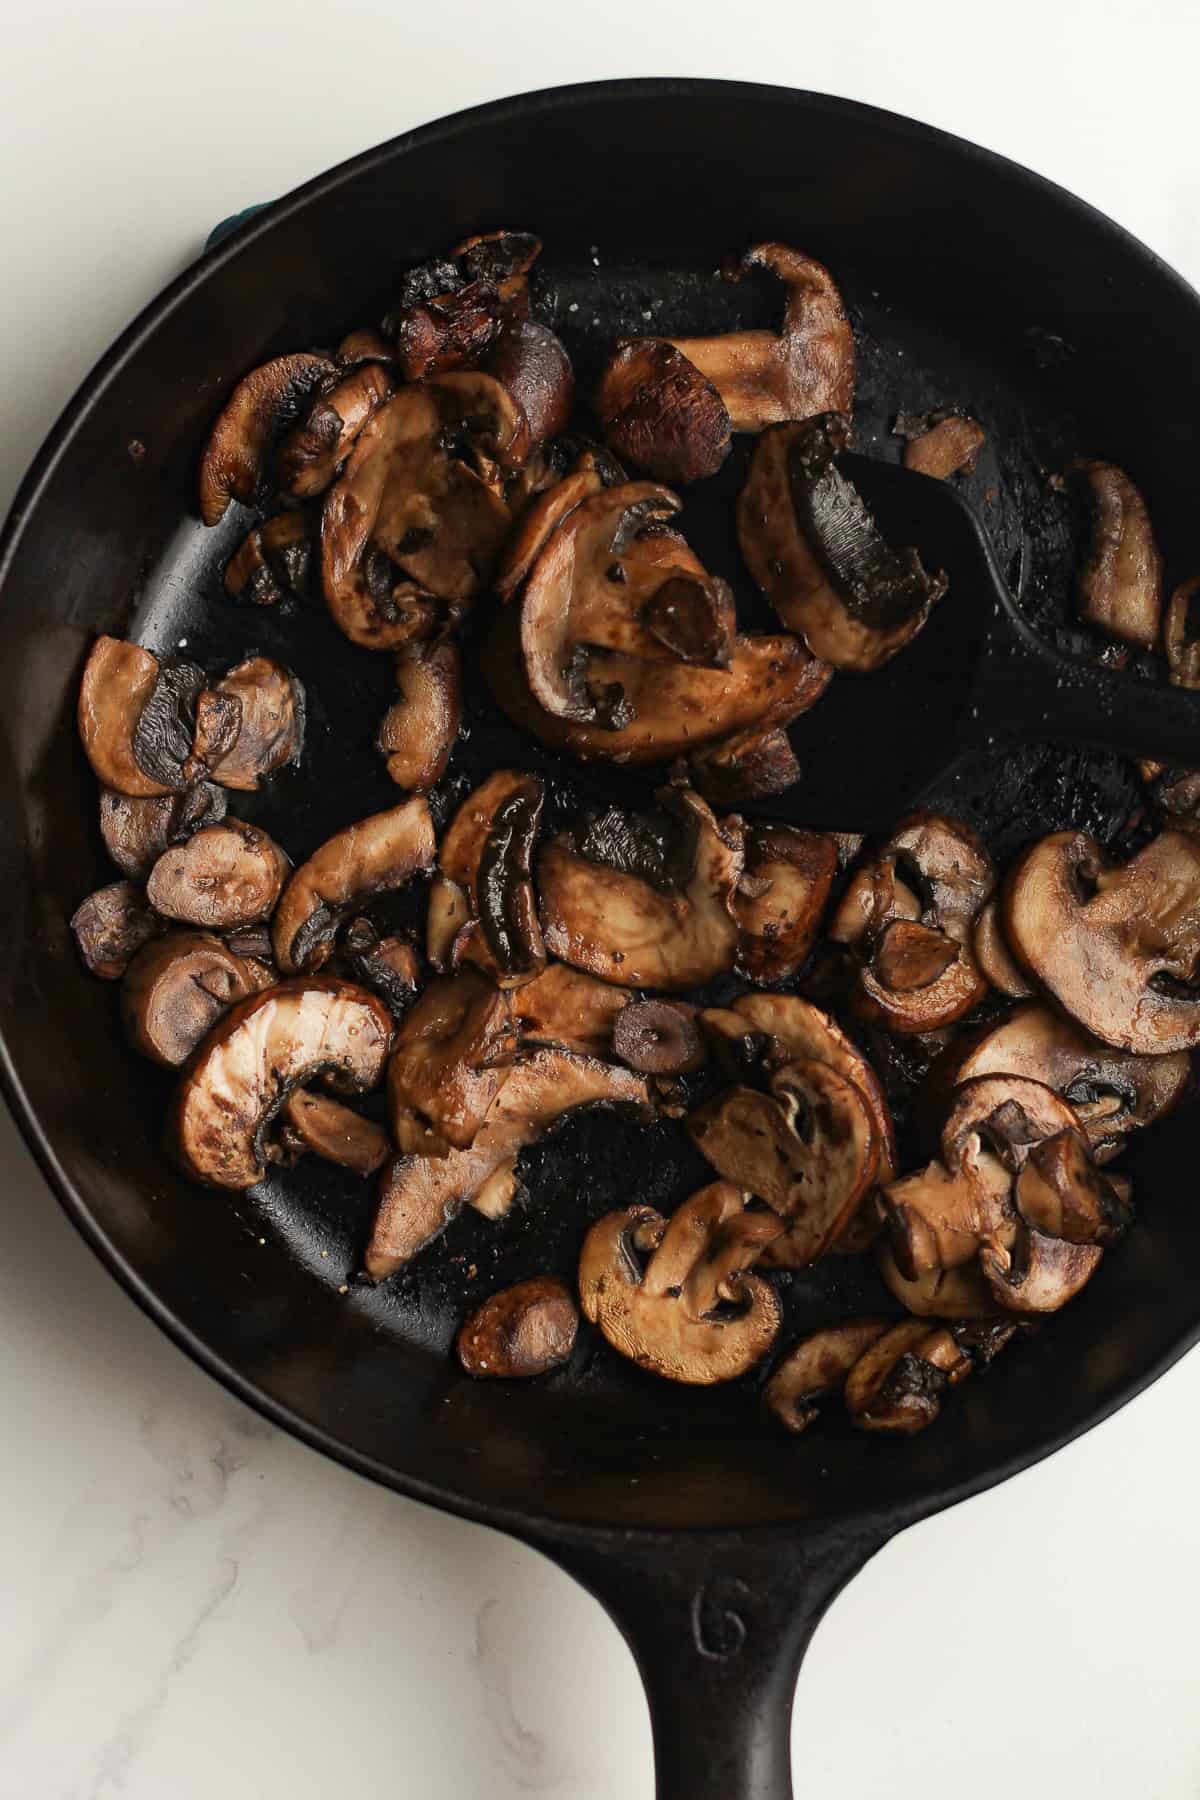 A skillet of browned mushrooms.